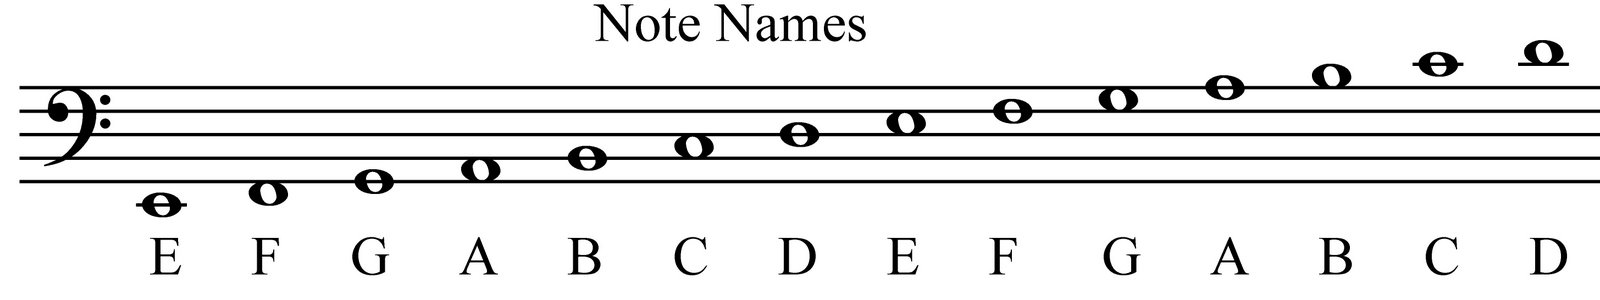 Grade 10 Music Blog: Music pitch notation